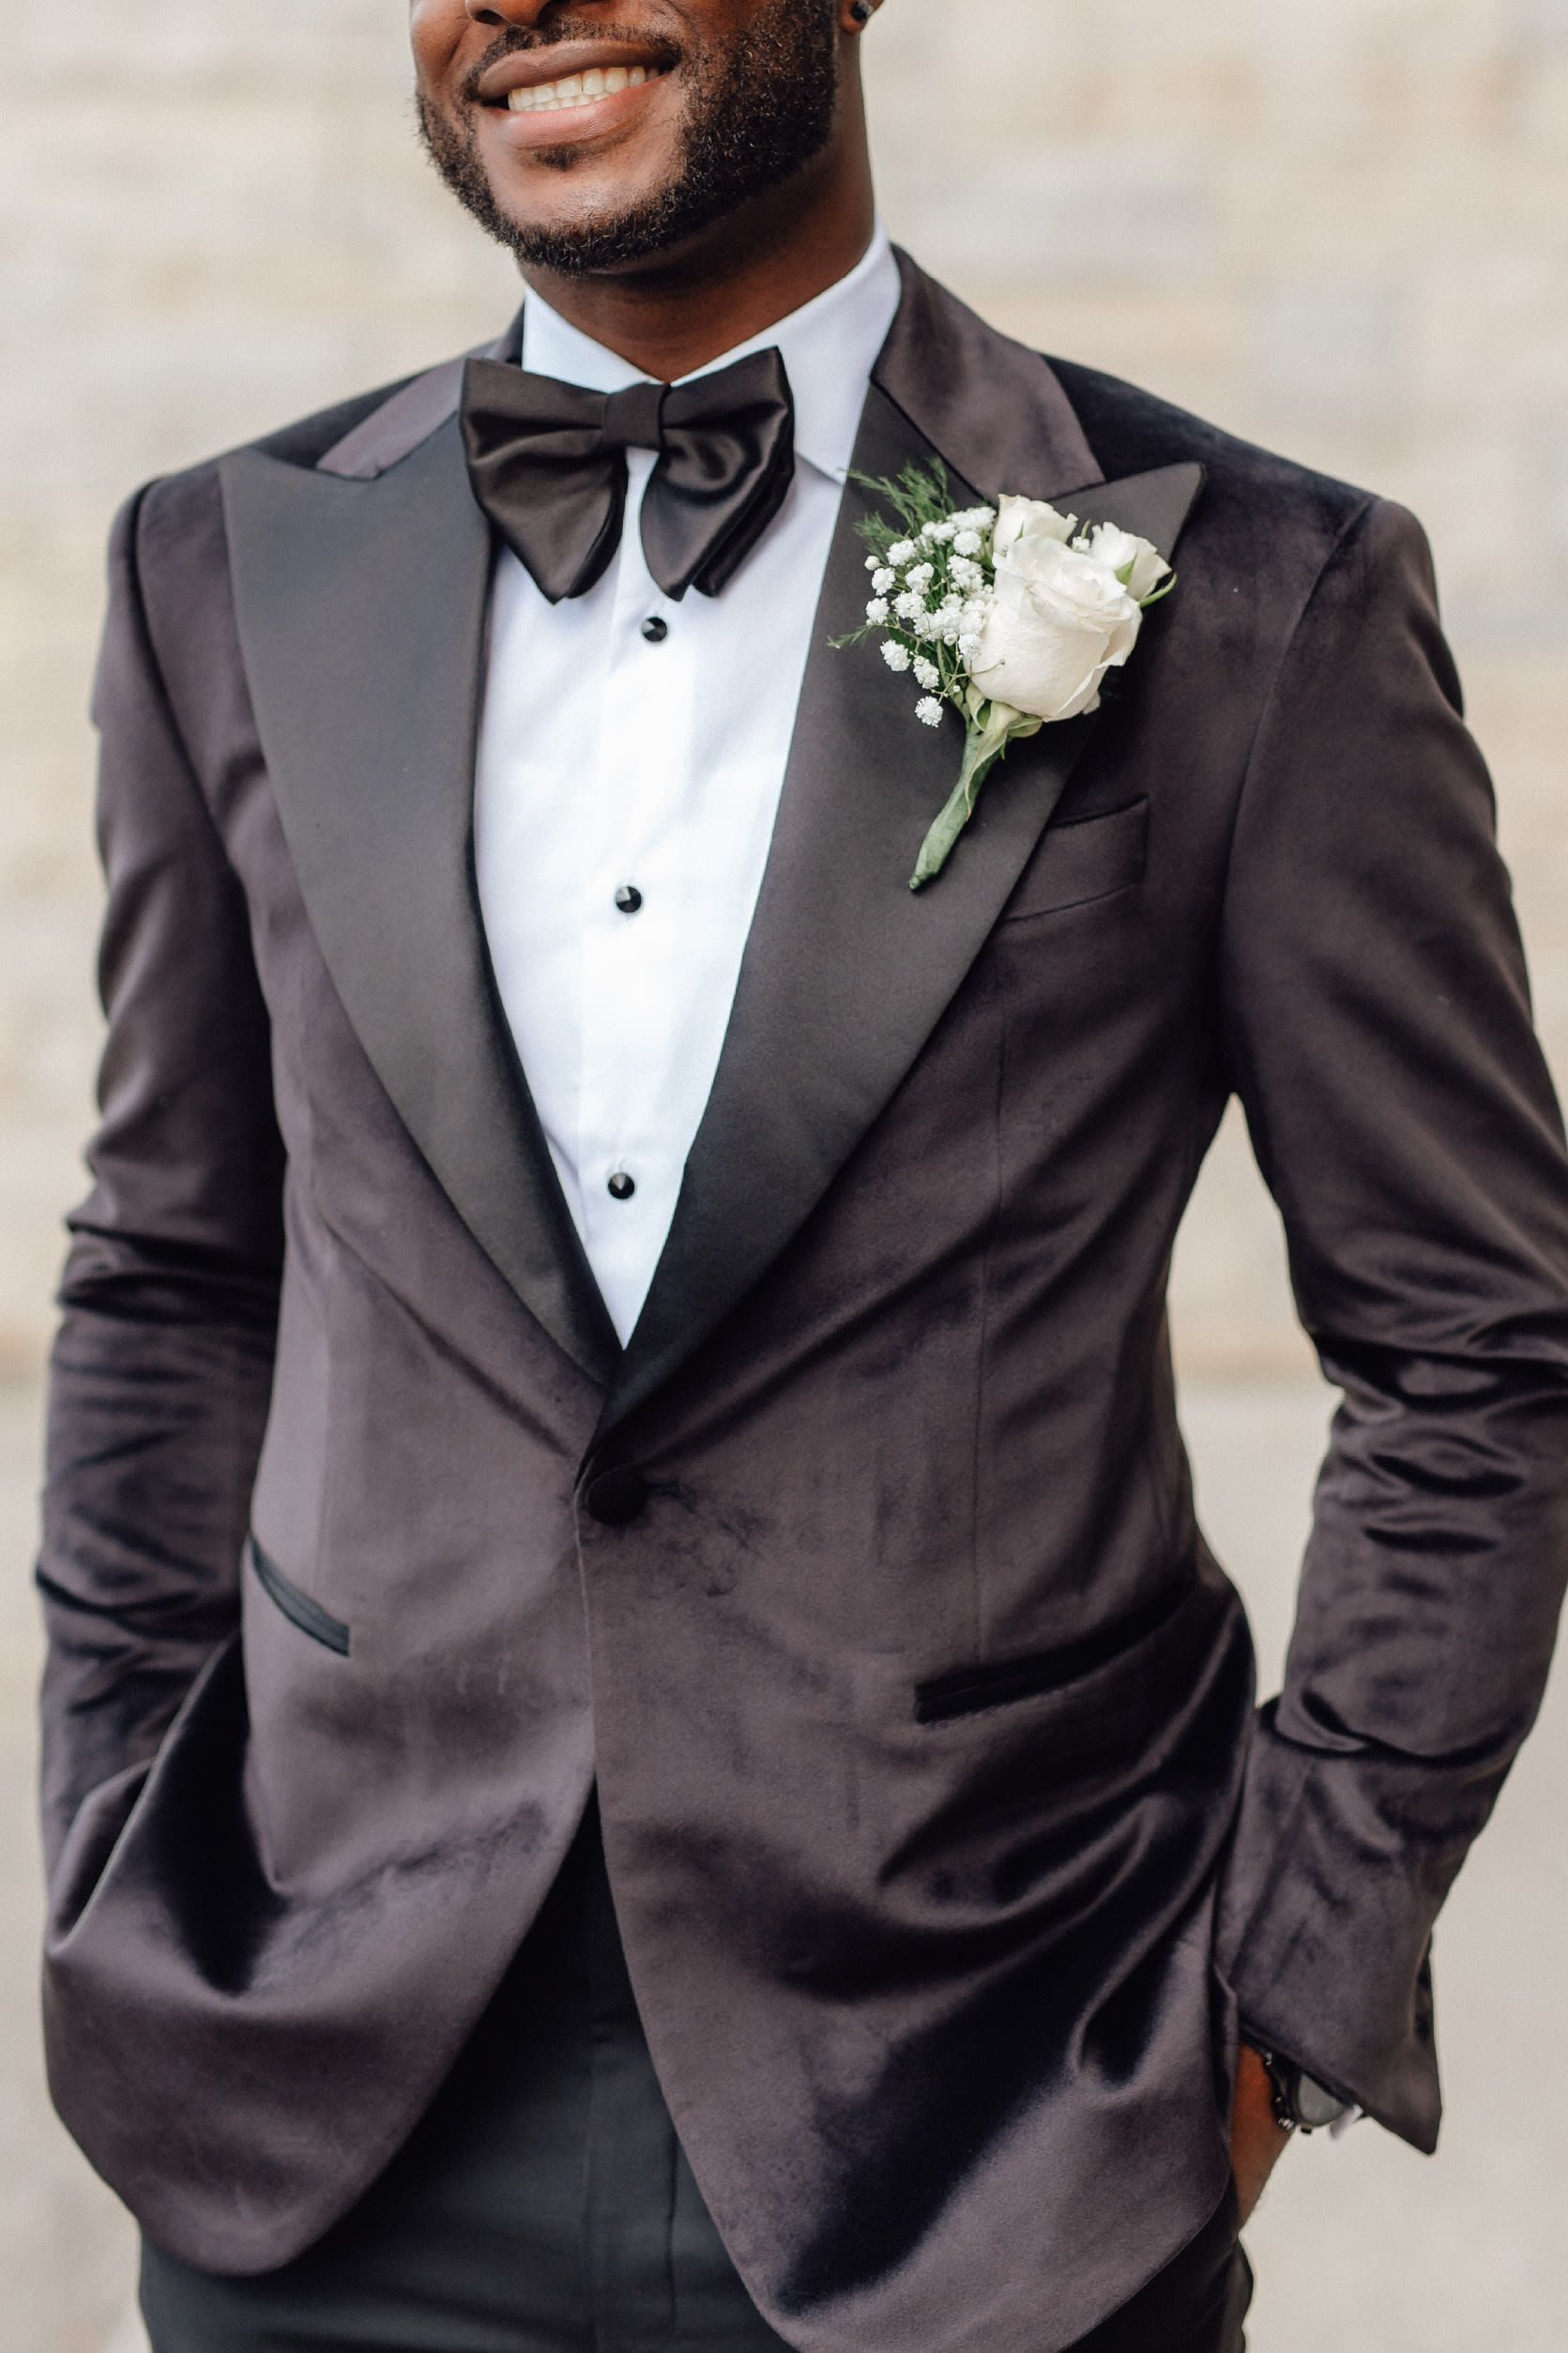 A custom King & Bay wedding suit